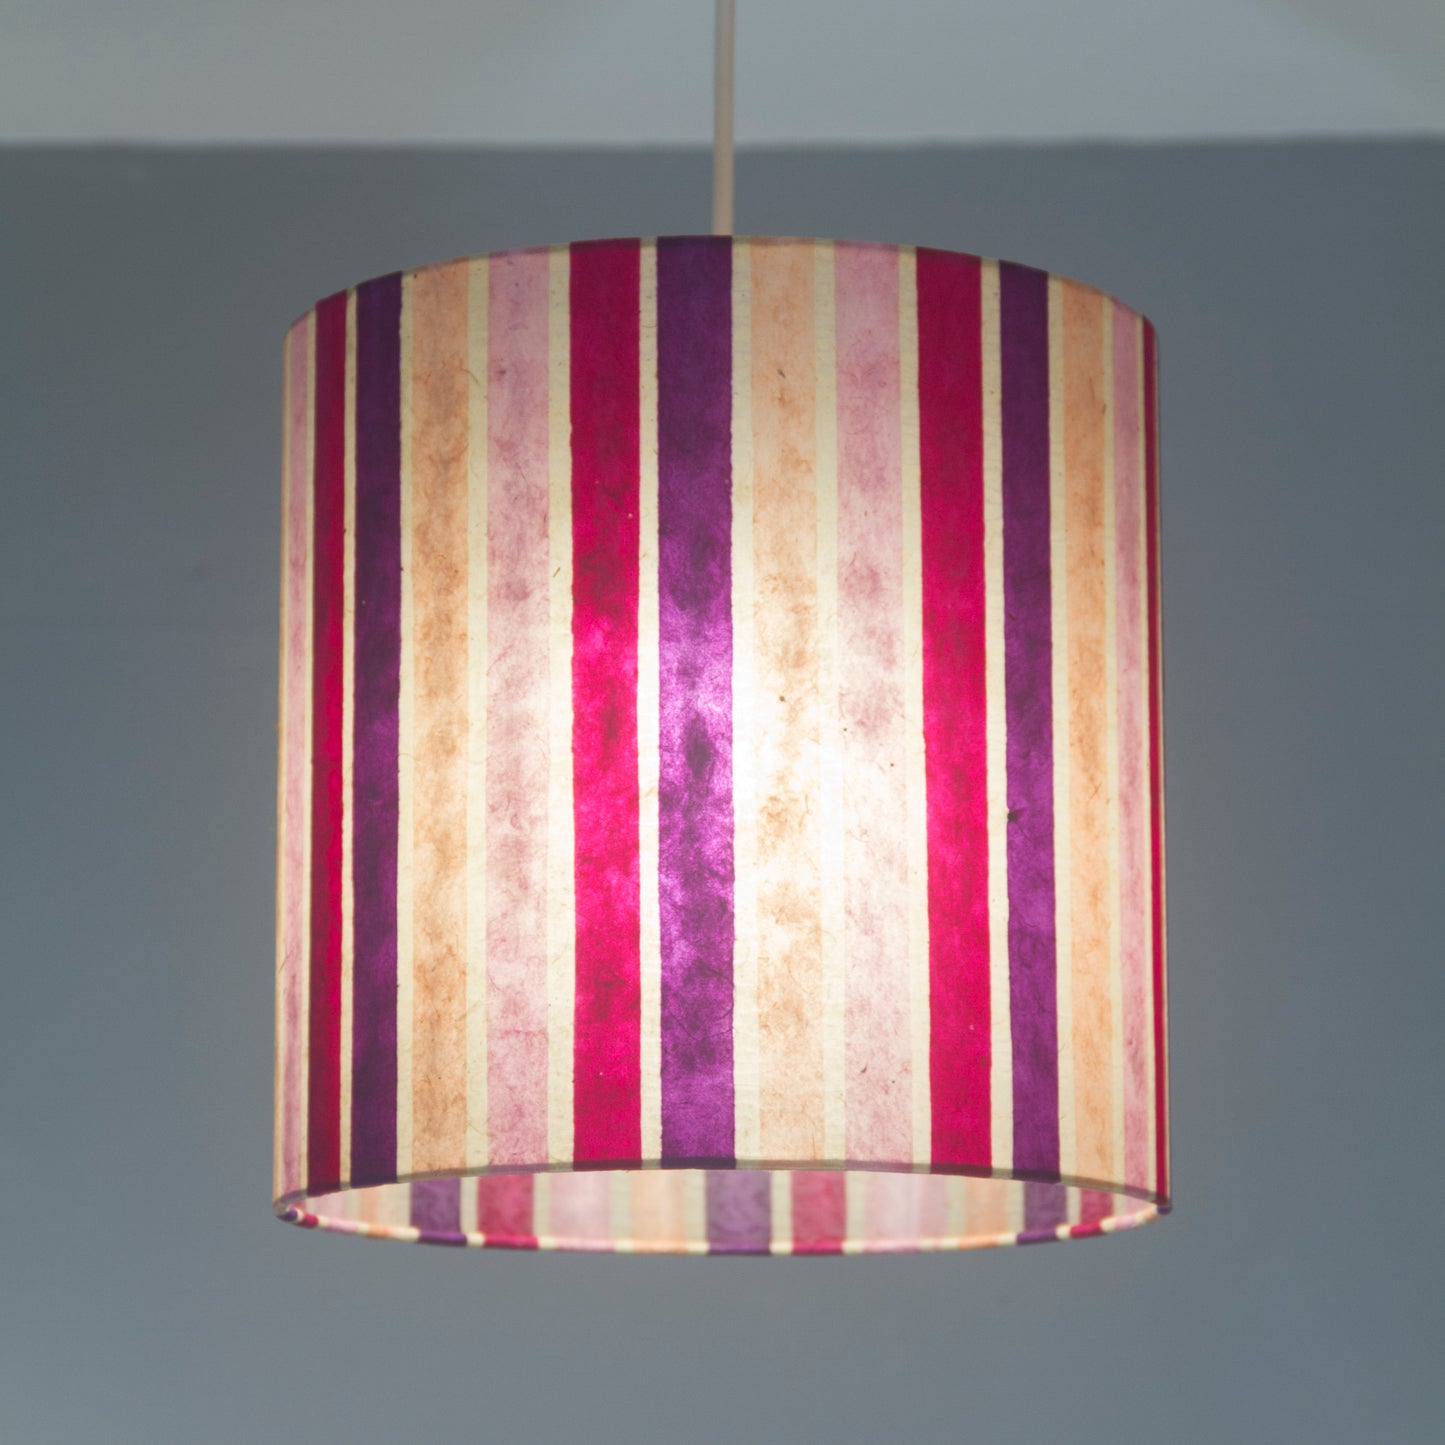 Oval Lamp Shade - P04 - Batik Stripes Pink, 30cm(w) x 20cm(h) x 22cm(d)